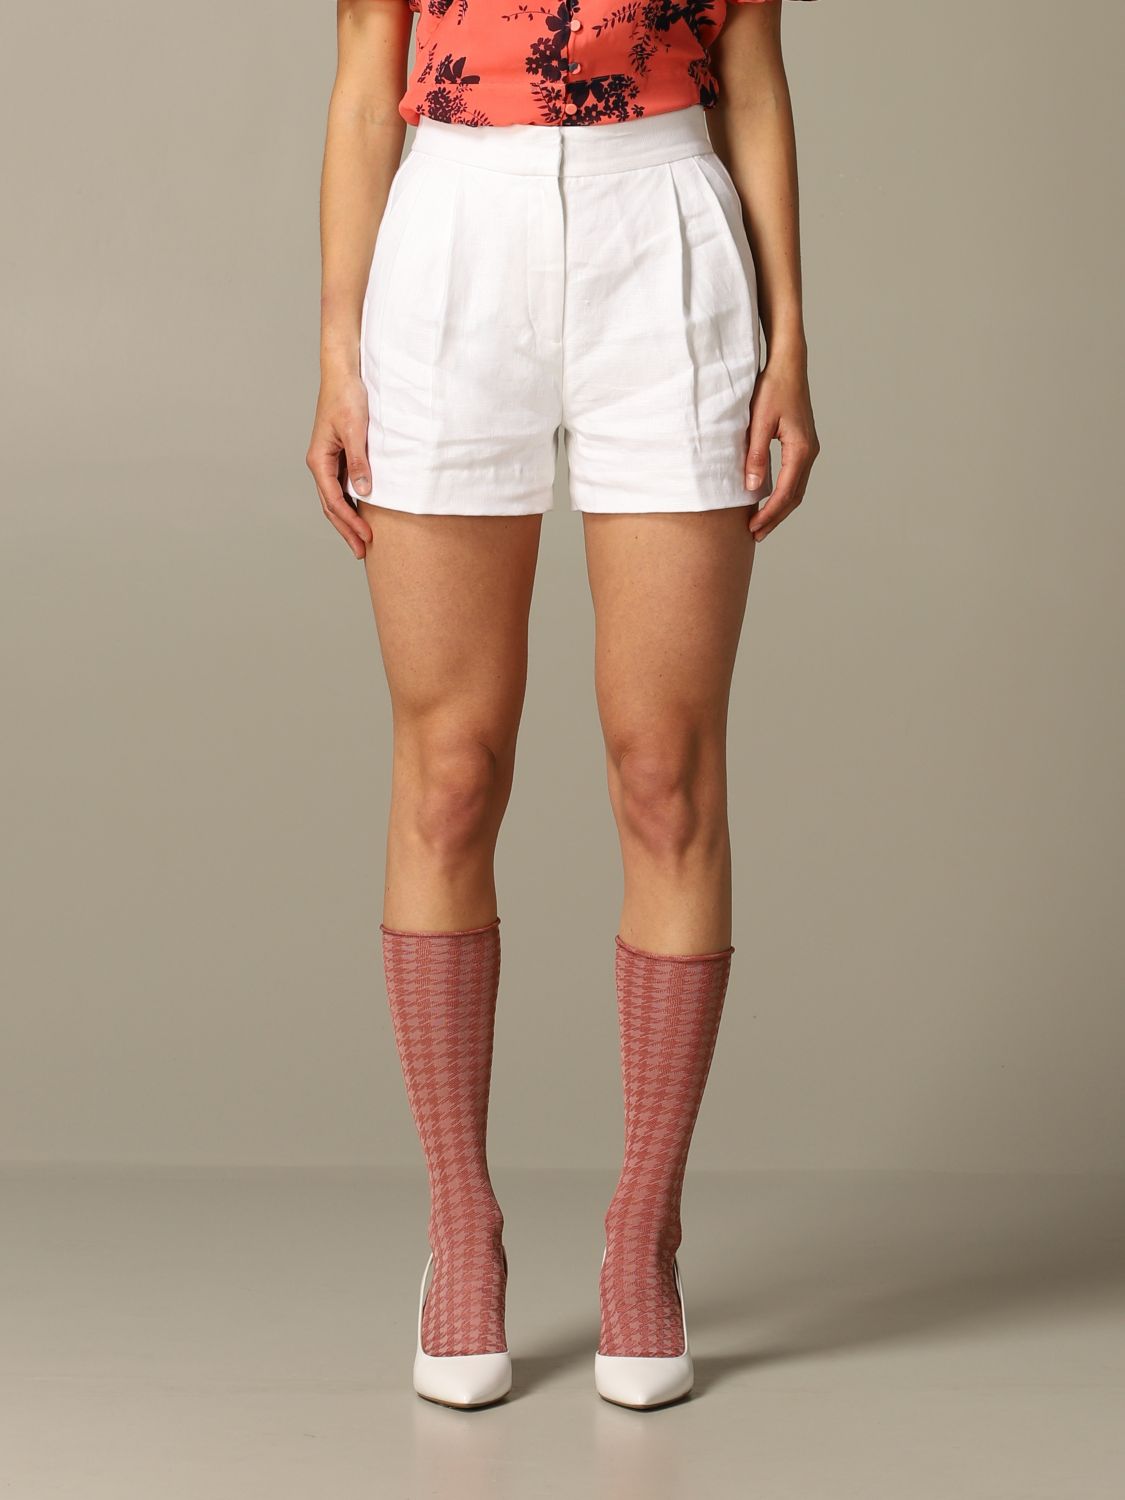 michael kors womens shorts